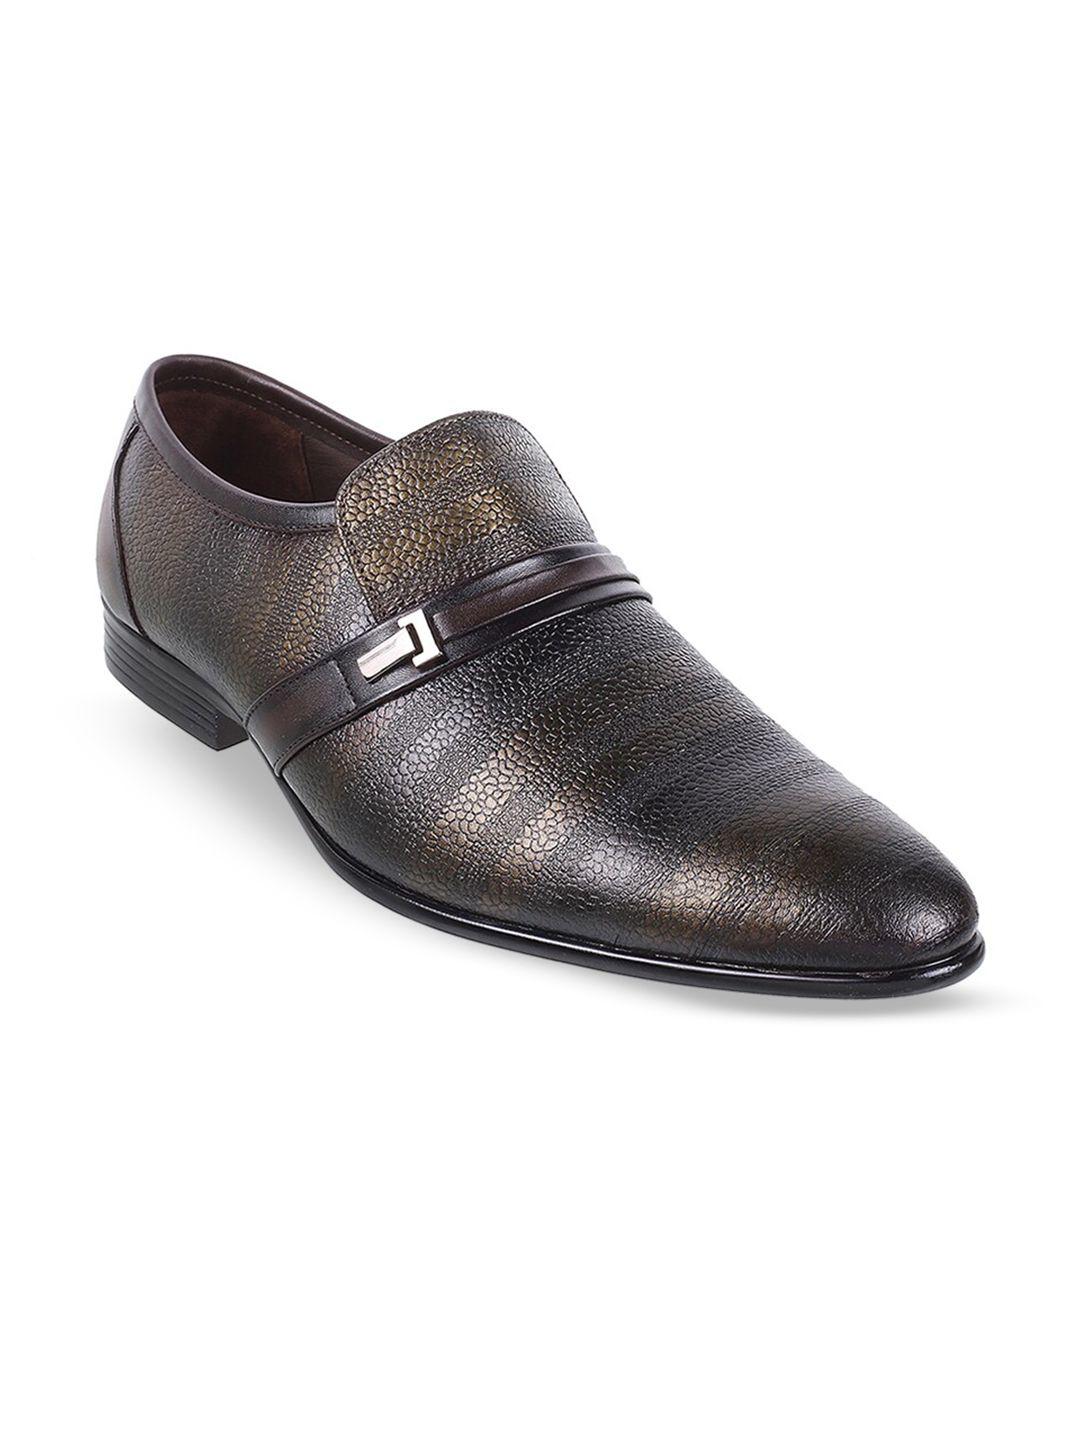 mochi men textured leather formal slip-on shoes shoes